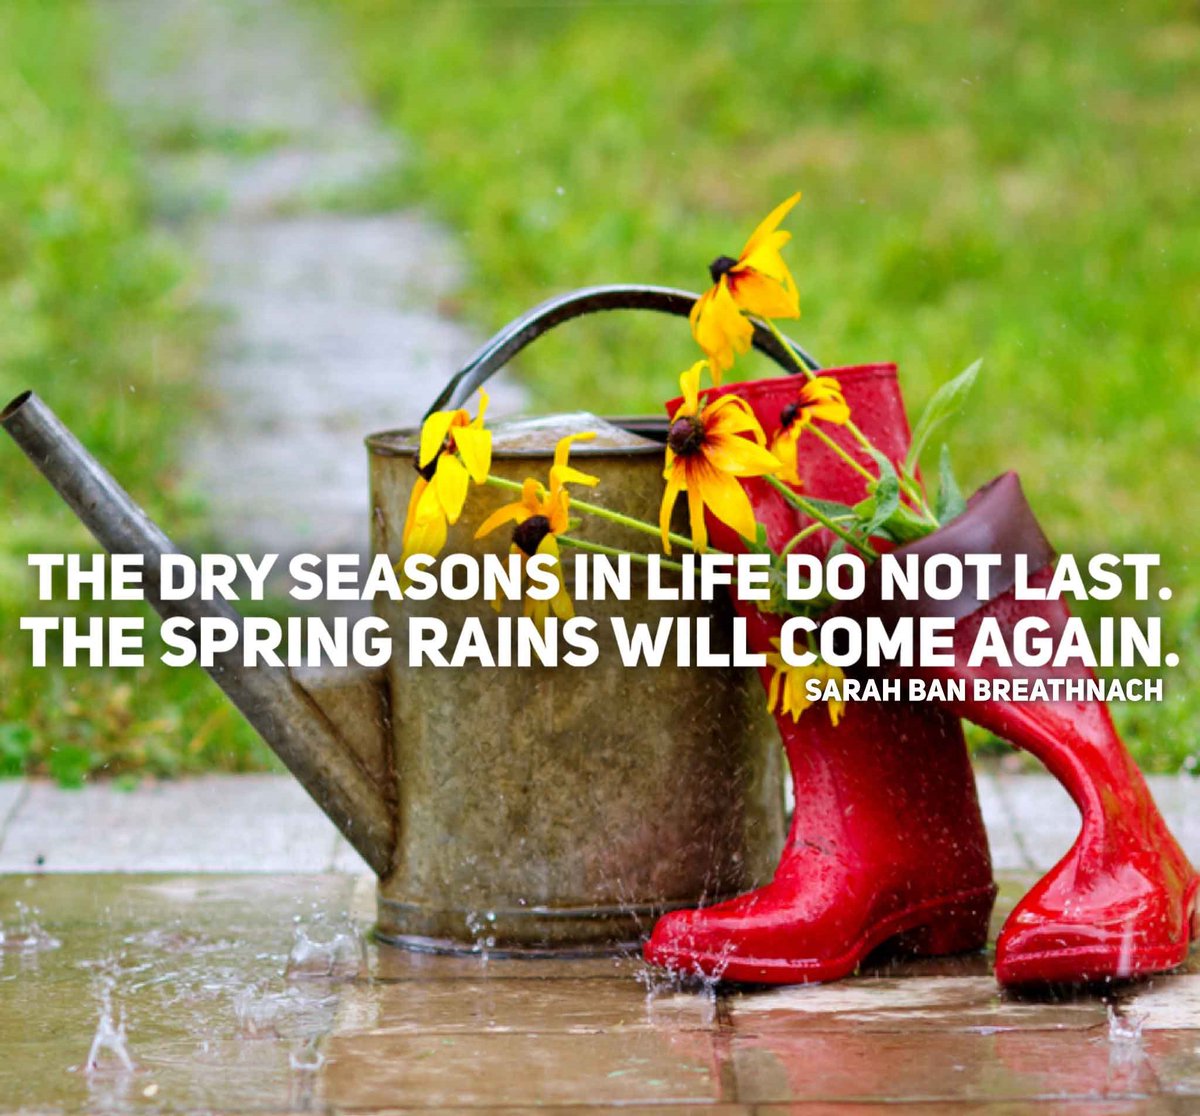 The dry seasons in life do not last. The spring rains will come again. #ThursdayMotivation #ThursdayThoughts #DrySeason #Spring